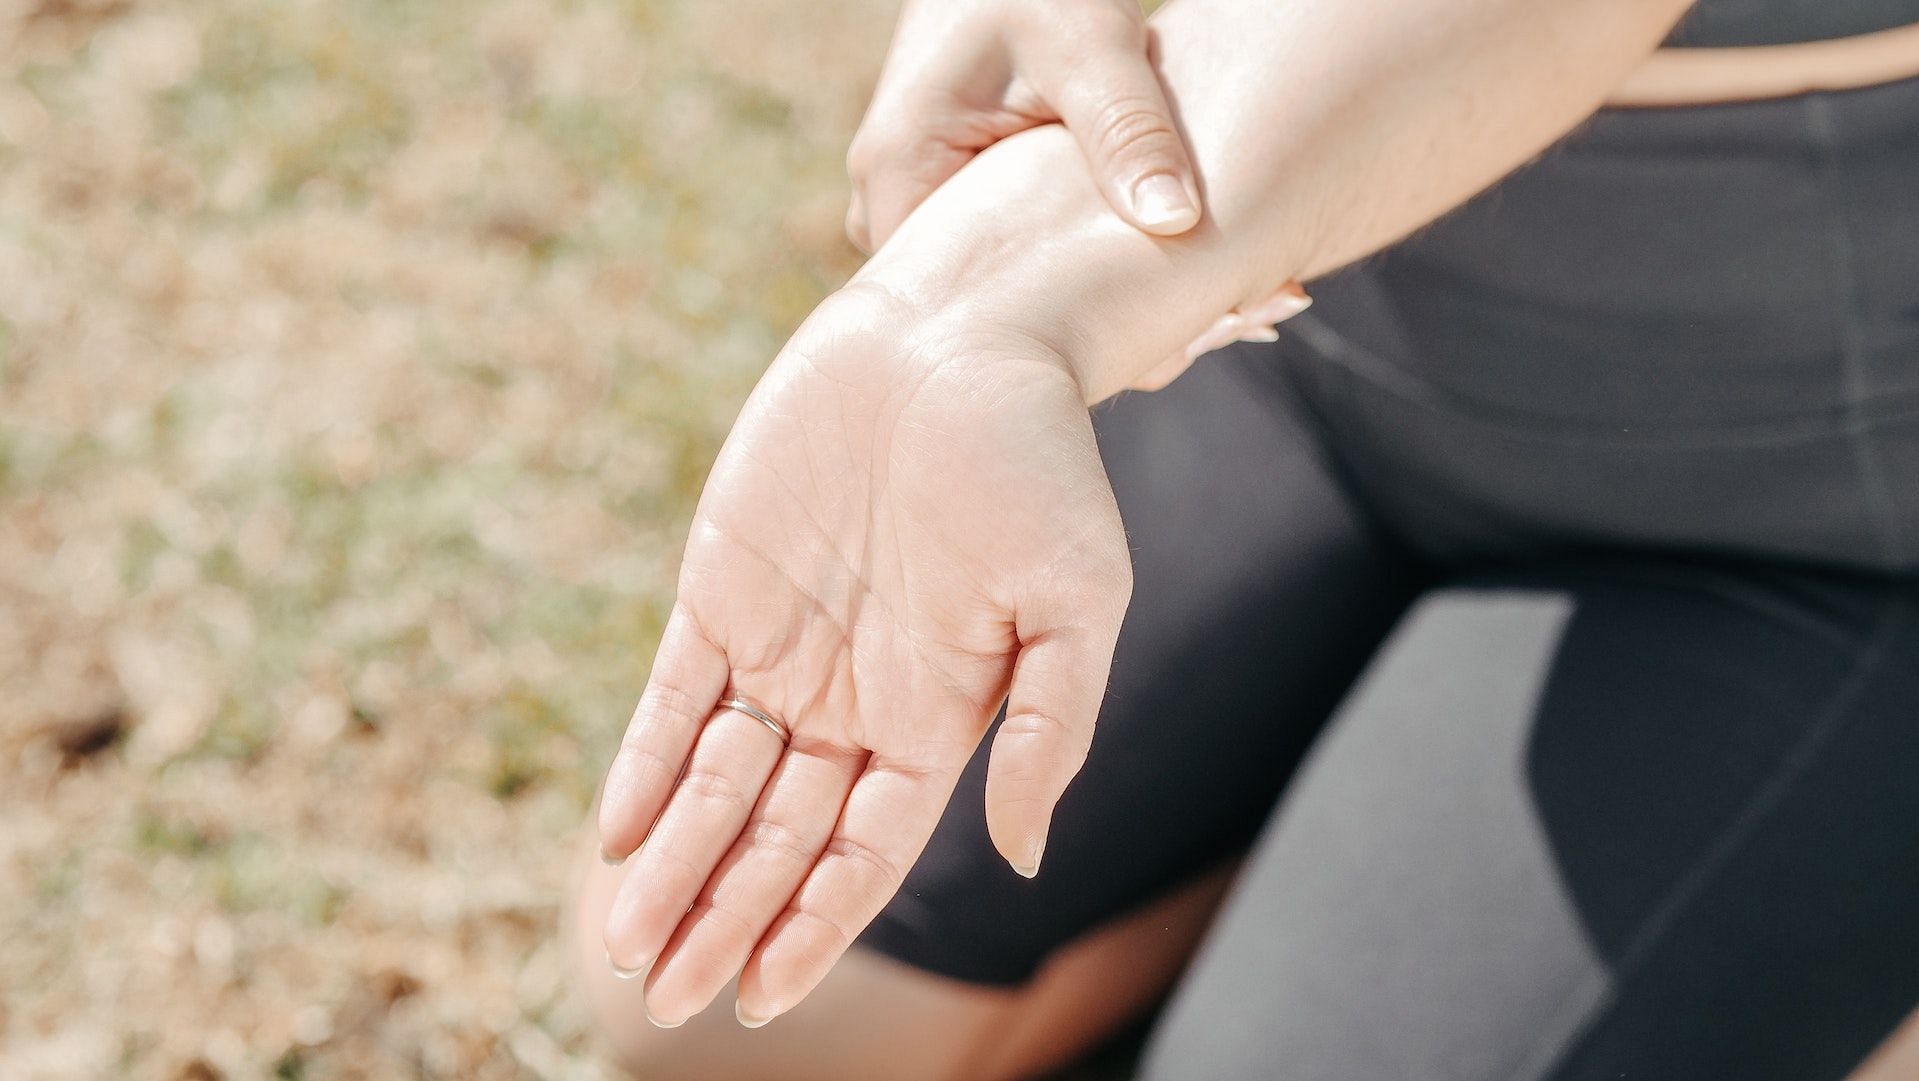 Arm flexion eases pain and discomfort. (Photo via Pexels/Kindel Media)